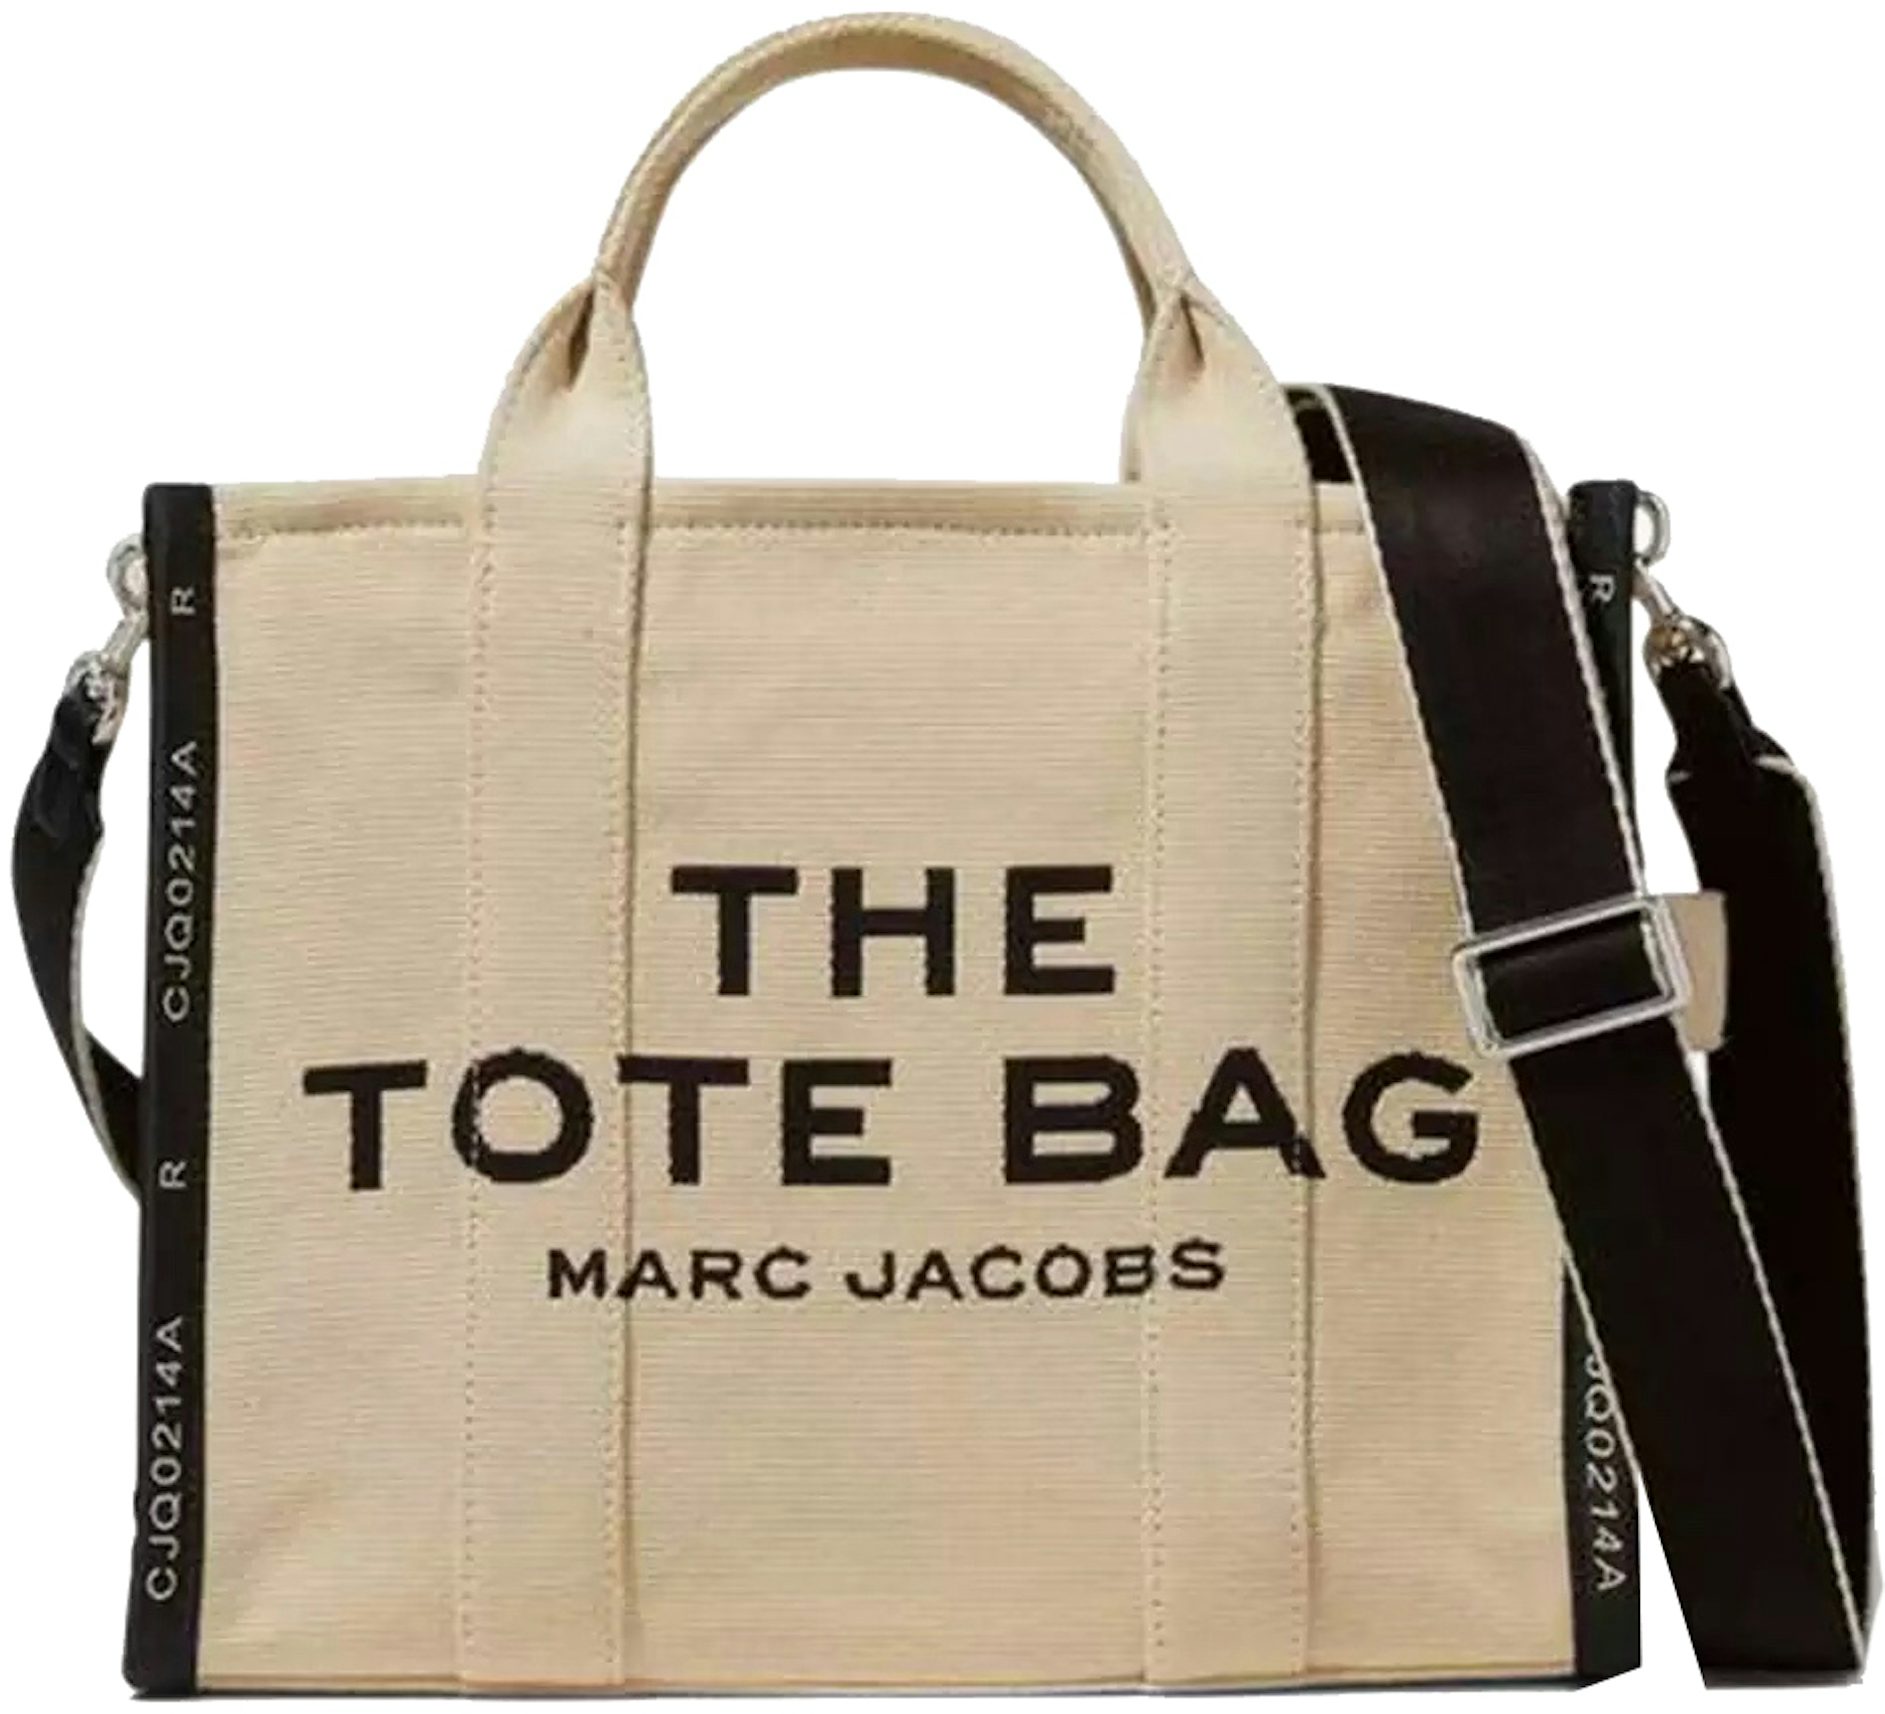 Monsieur B tote bag